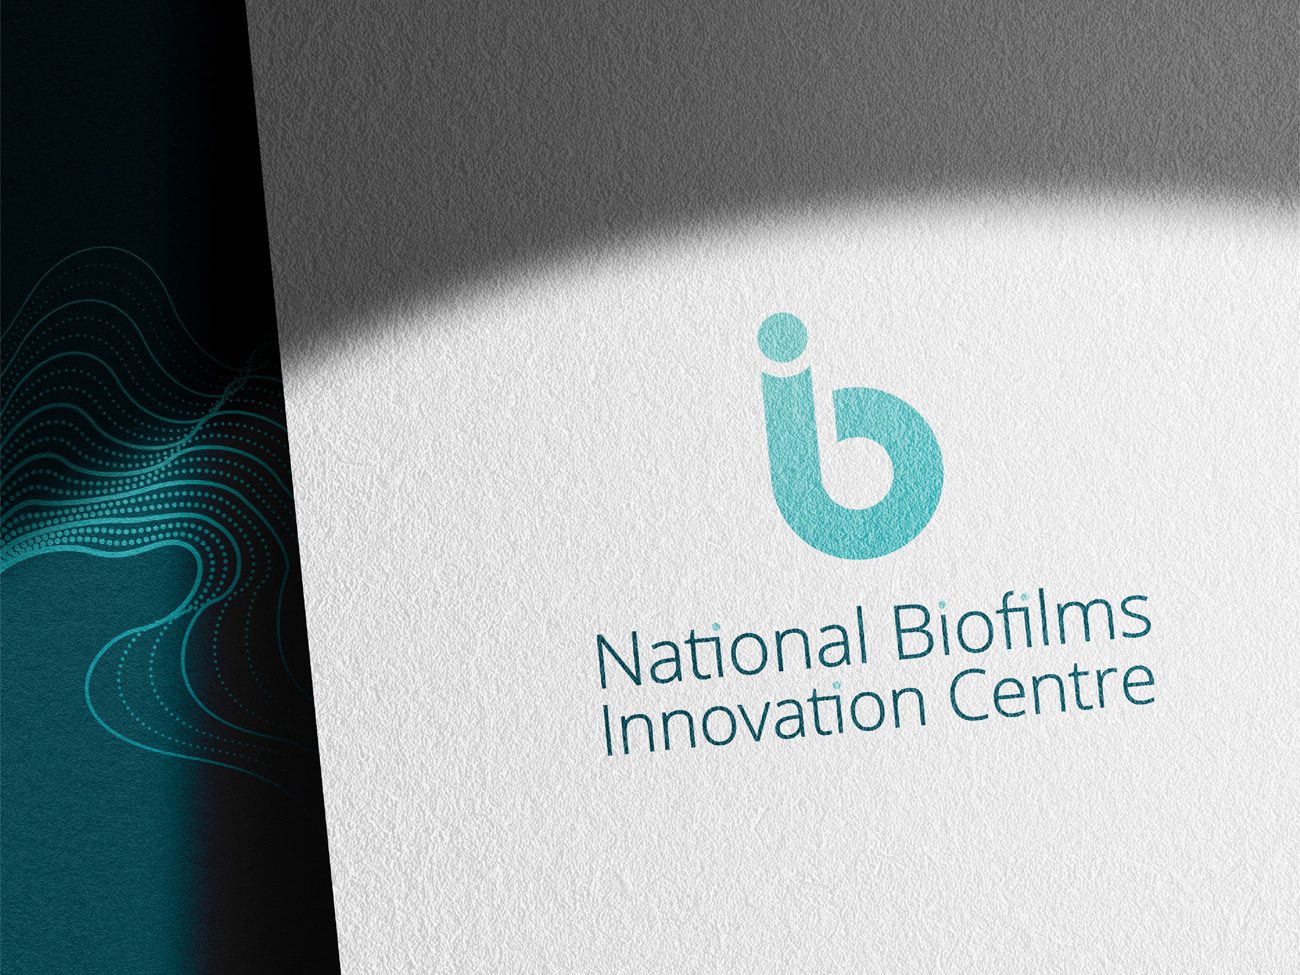 National Biofilms Innovation Centre